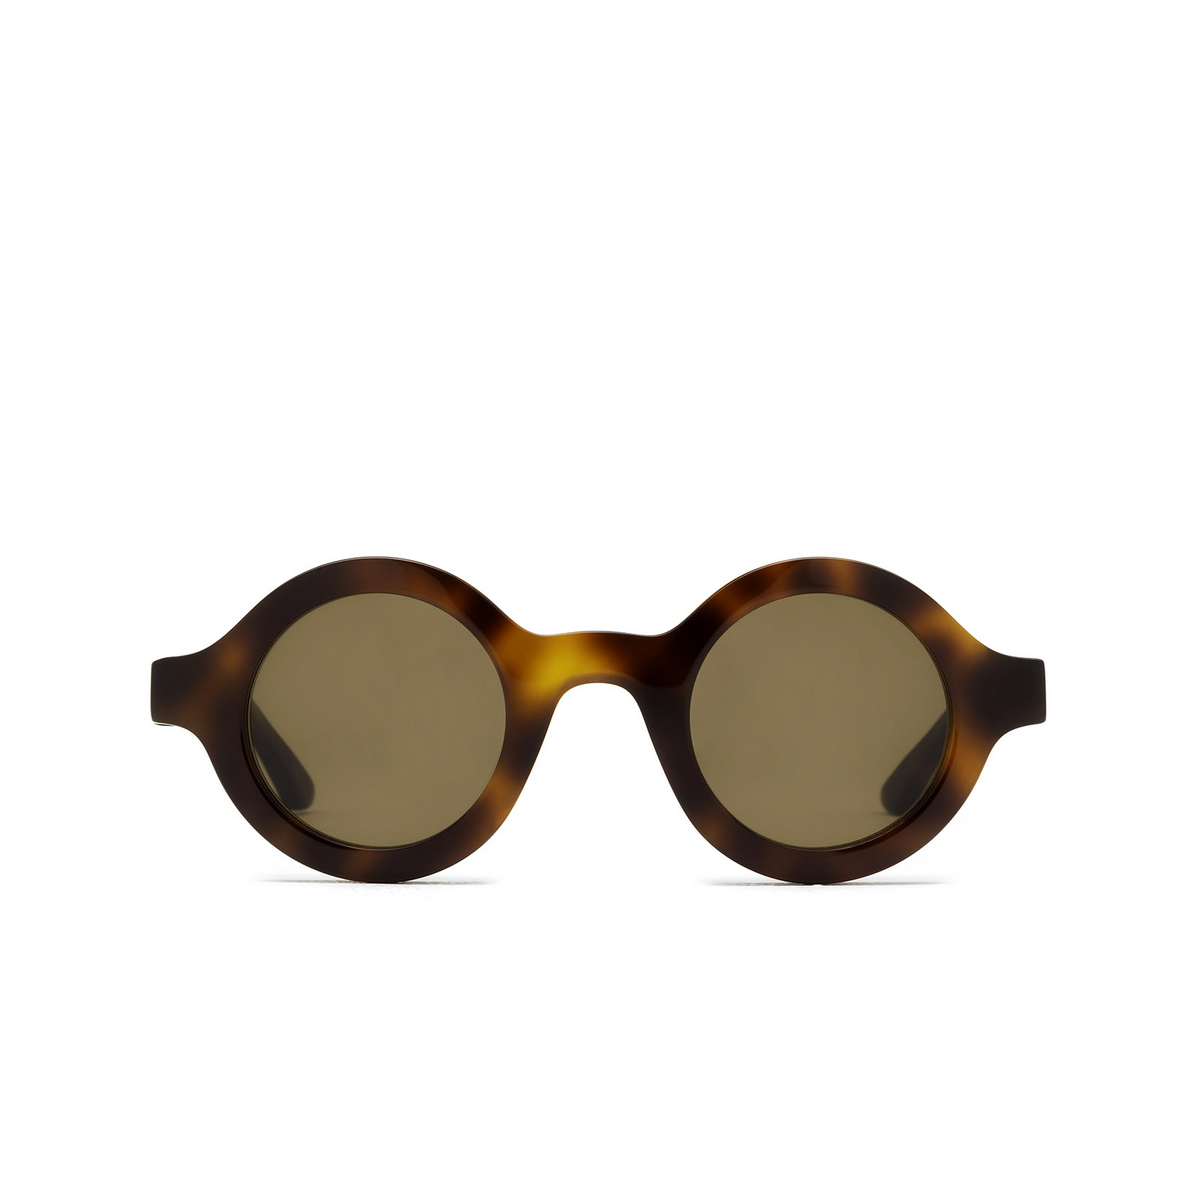 Huma® Round Sunglasses: Myo color Havana 00 - front view.